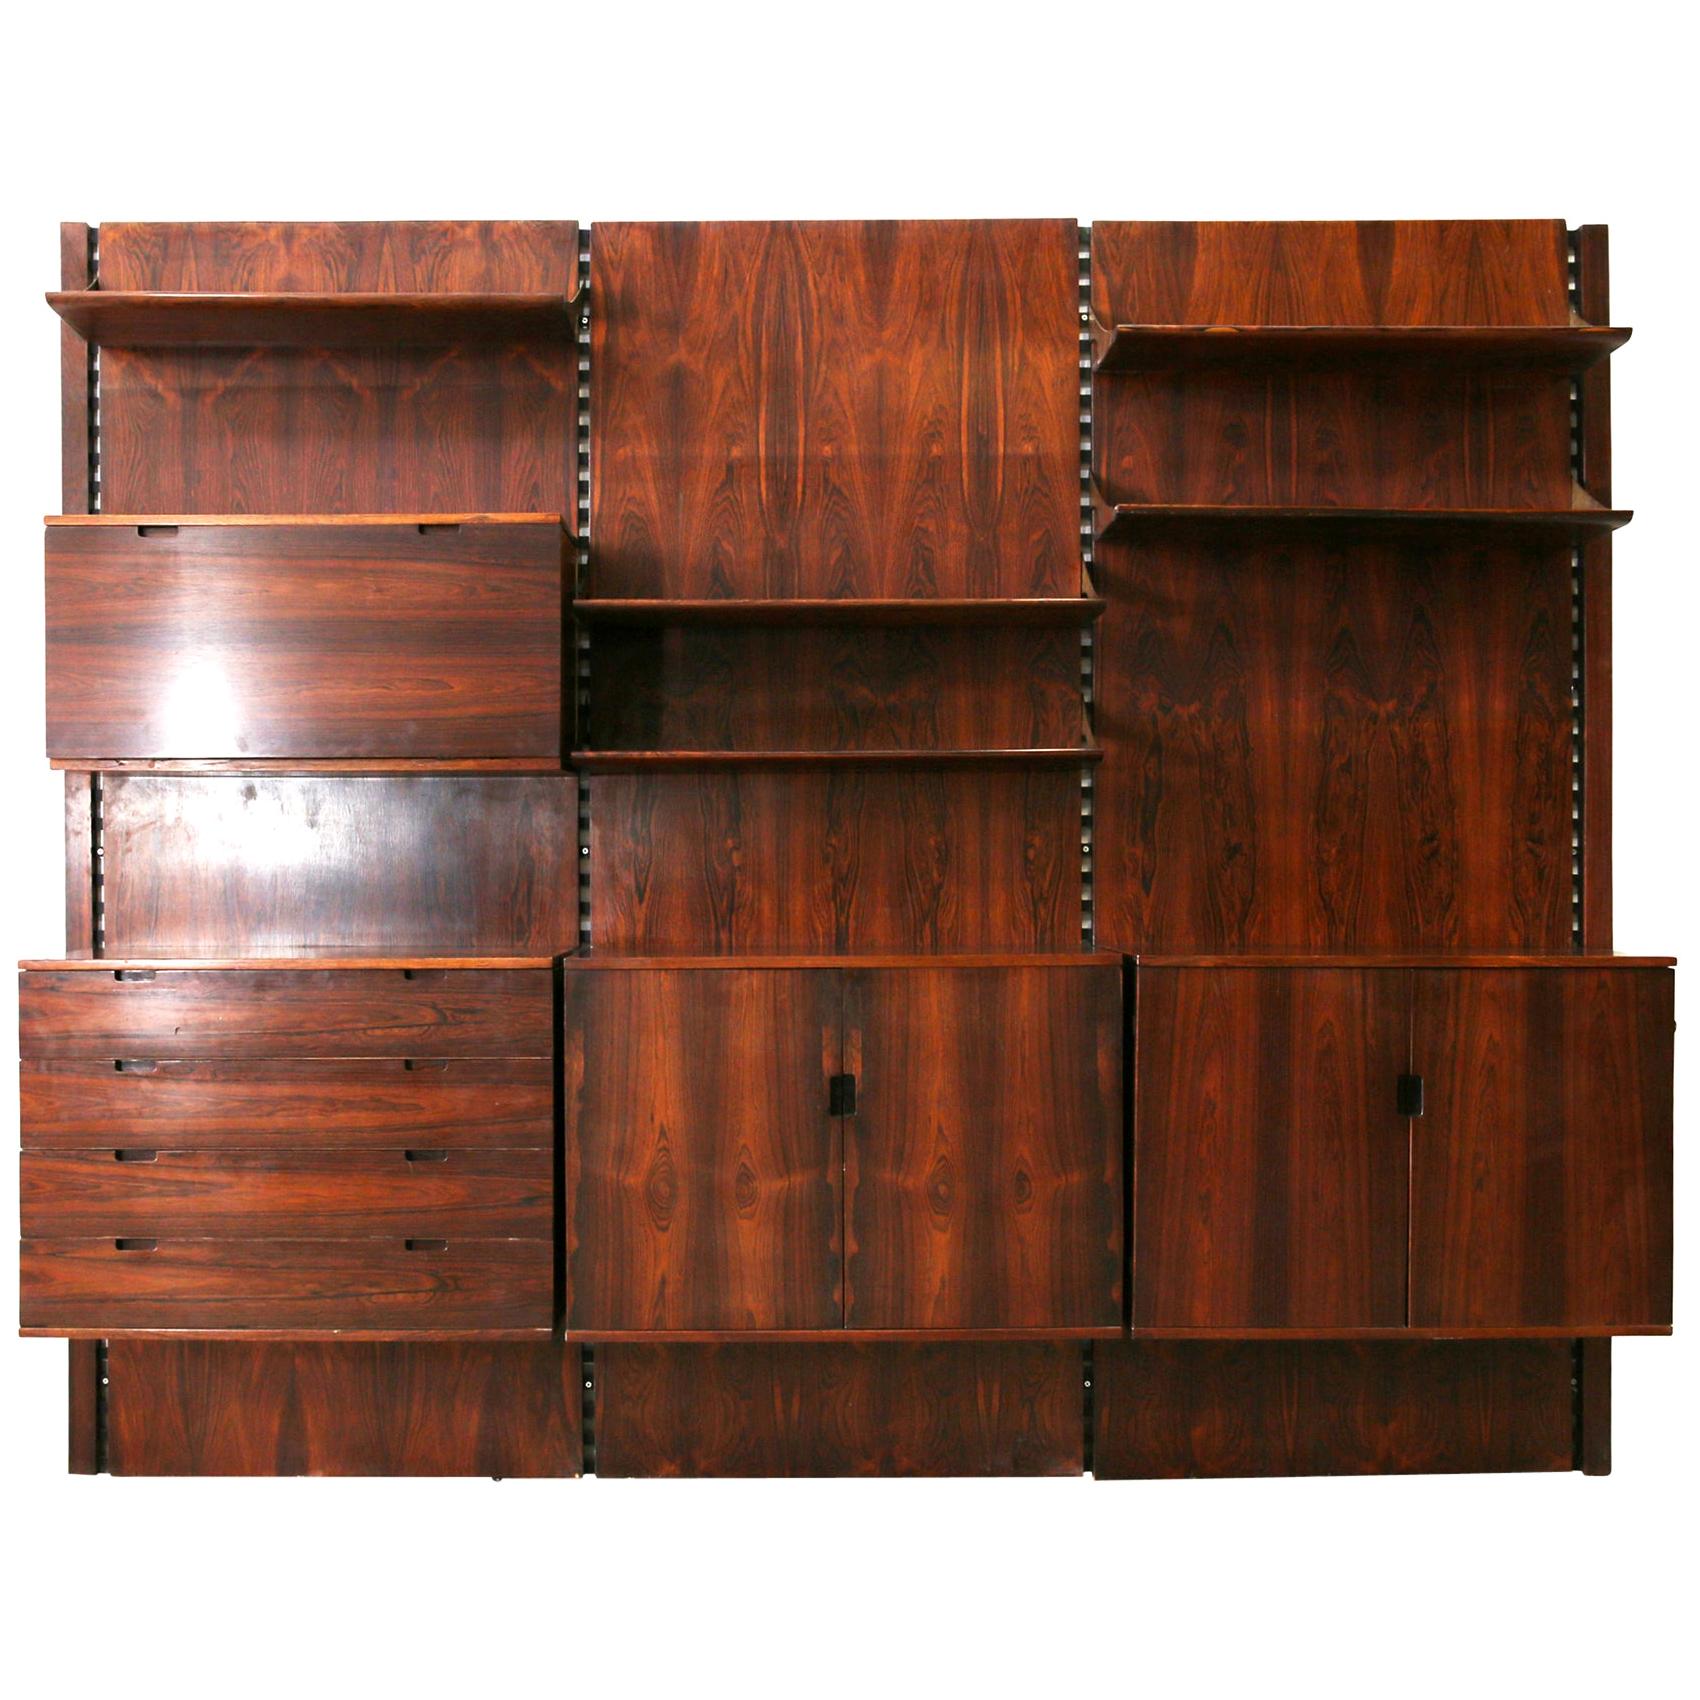 Raffaella Crespi System Bookcase in wood and brass by Mobilia, 1960s